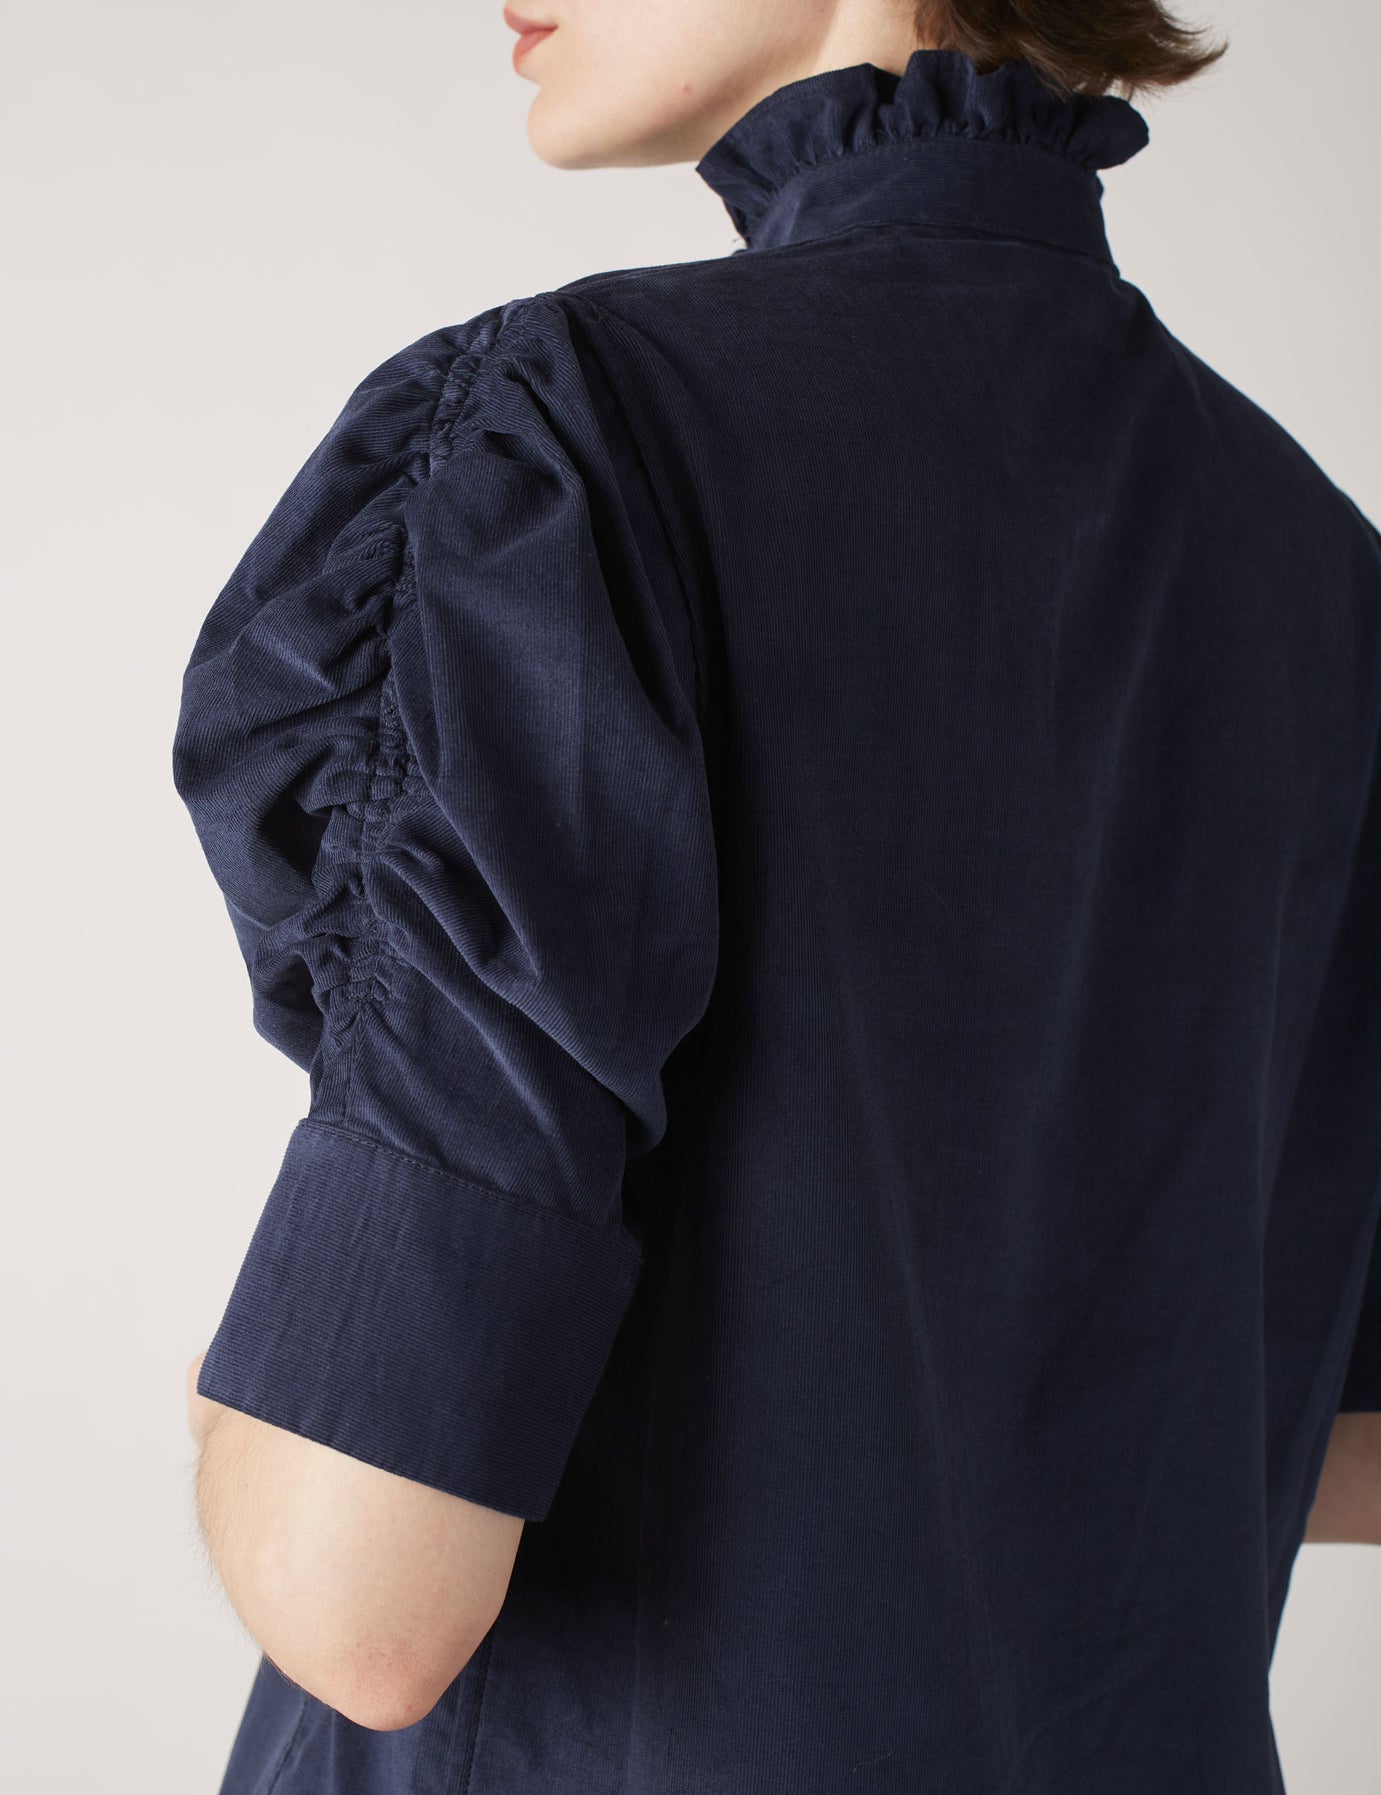 Back view of Vita Prussian Blue Corduroy Shirt by Thierry Colson